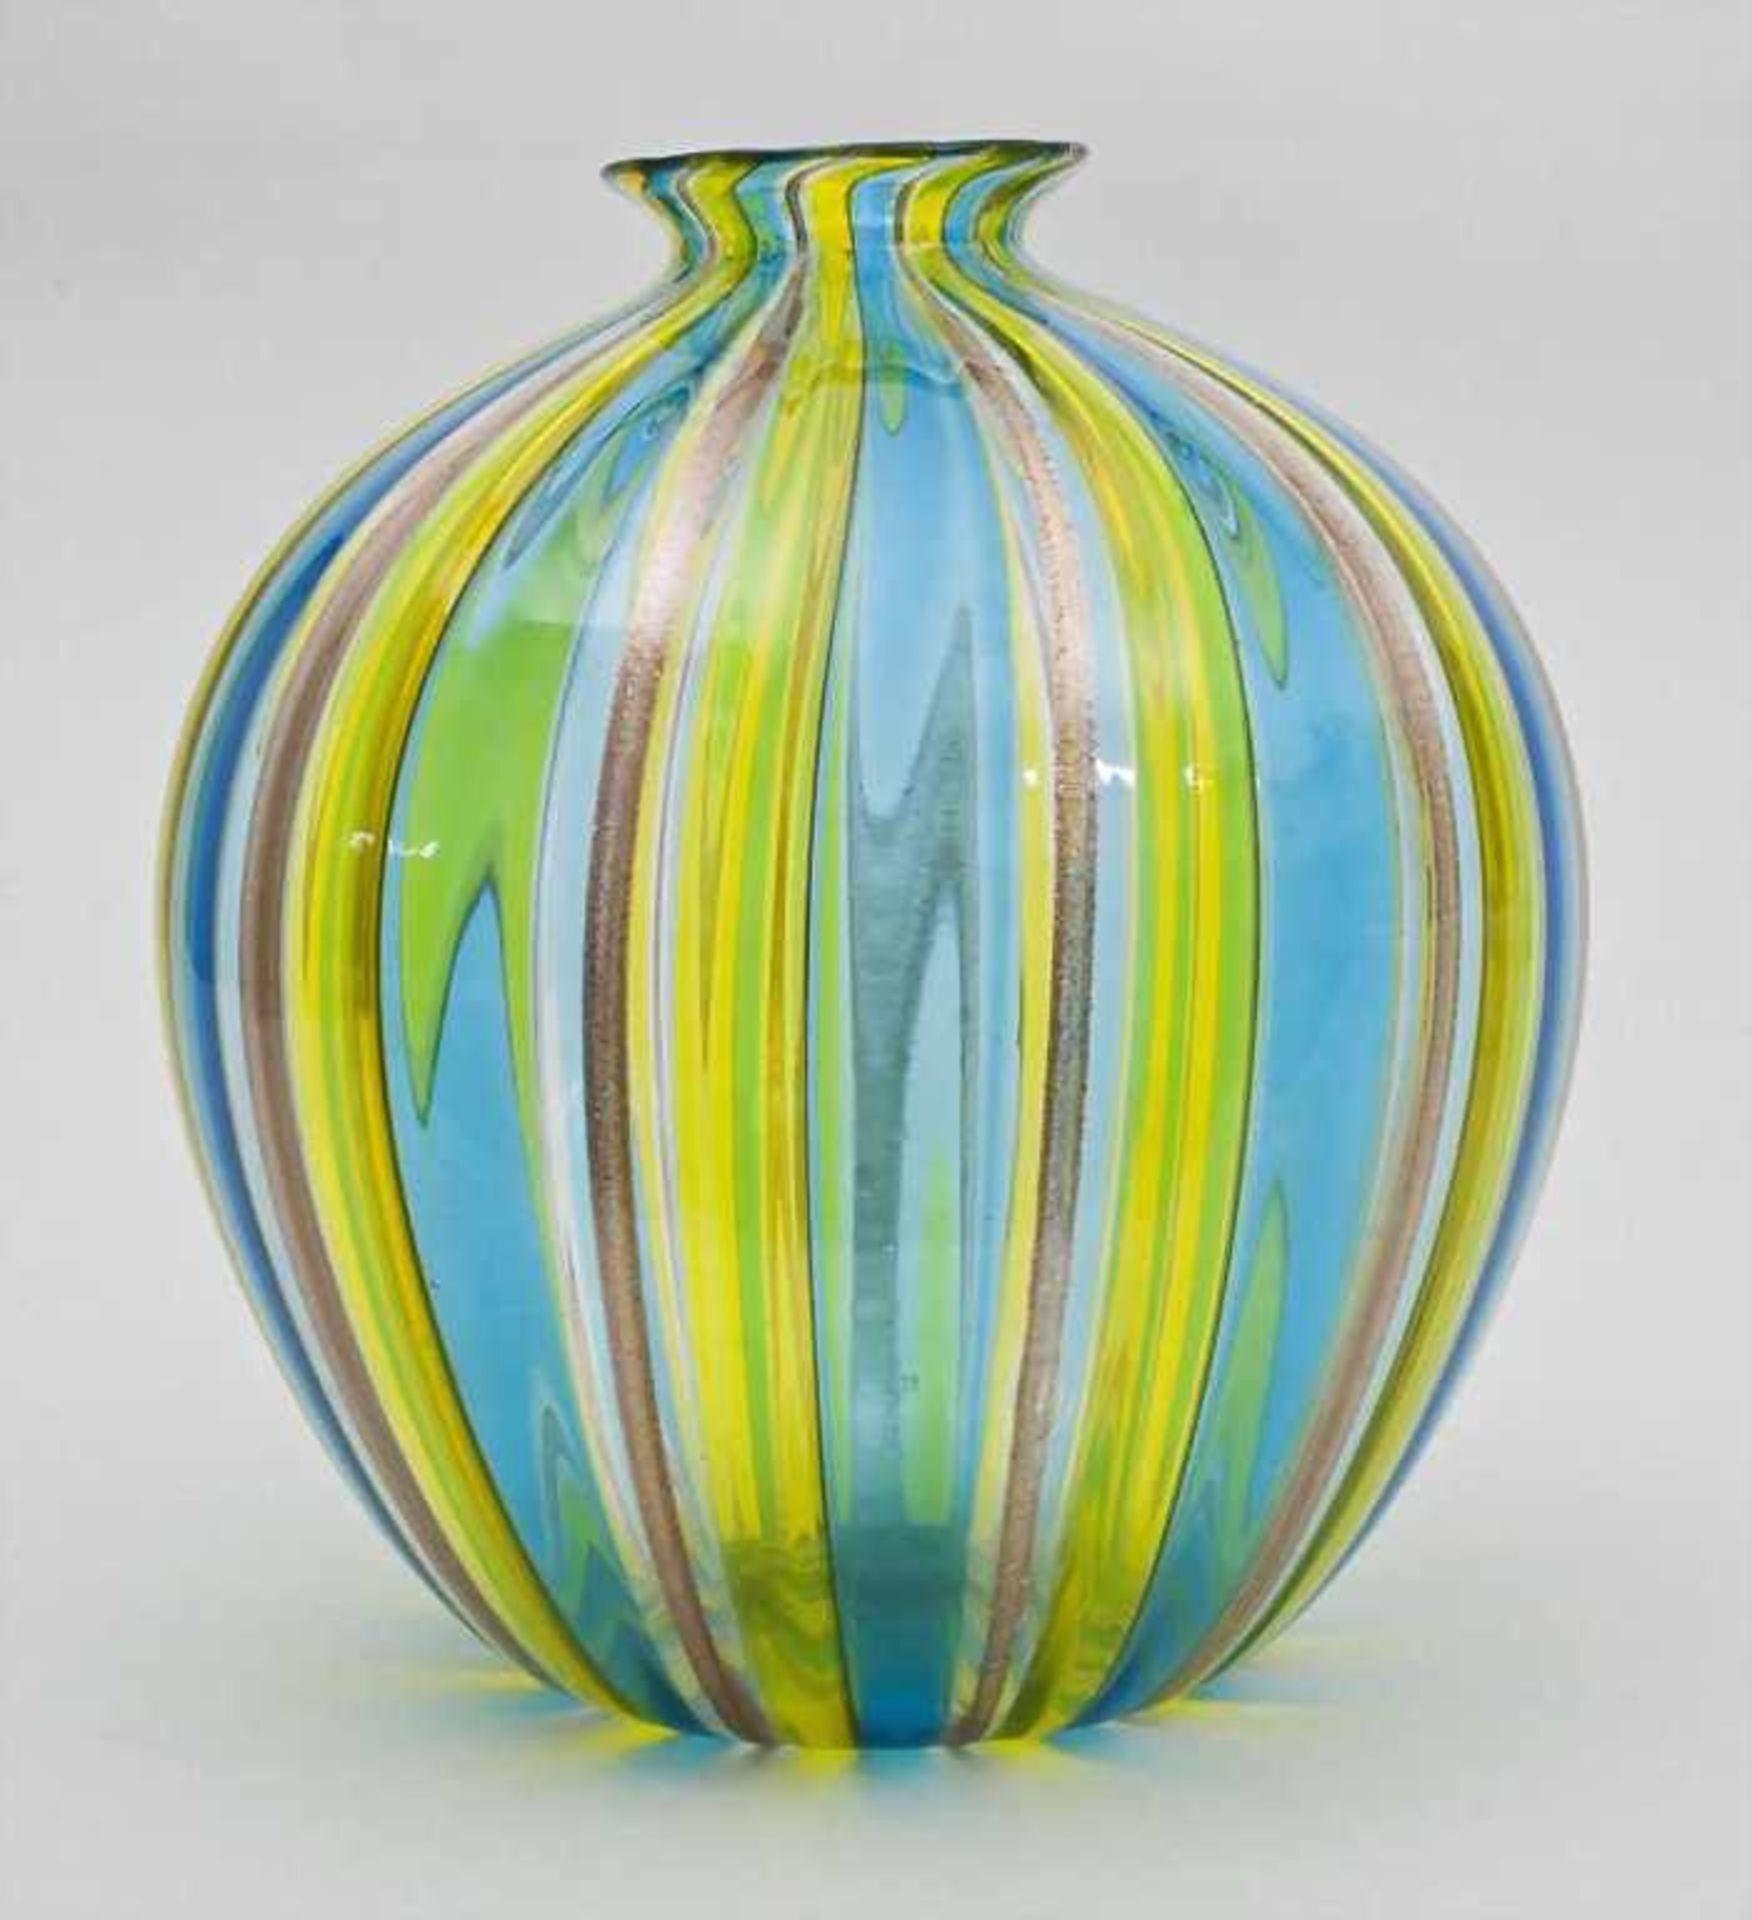 Kugelvase 'a canne' / A Spherical Vase, wohl Venini, Murano, Italien, um 1950